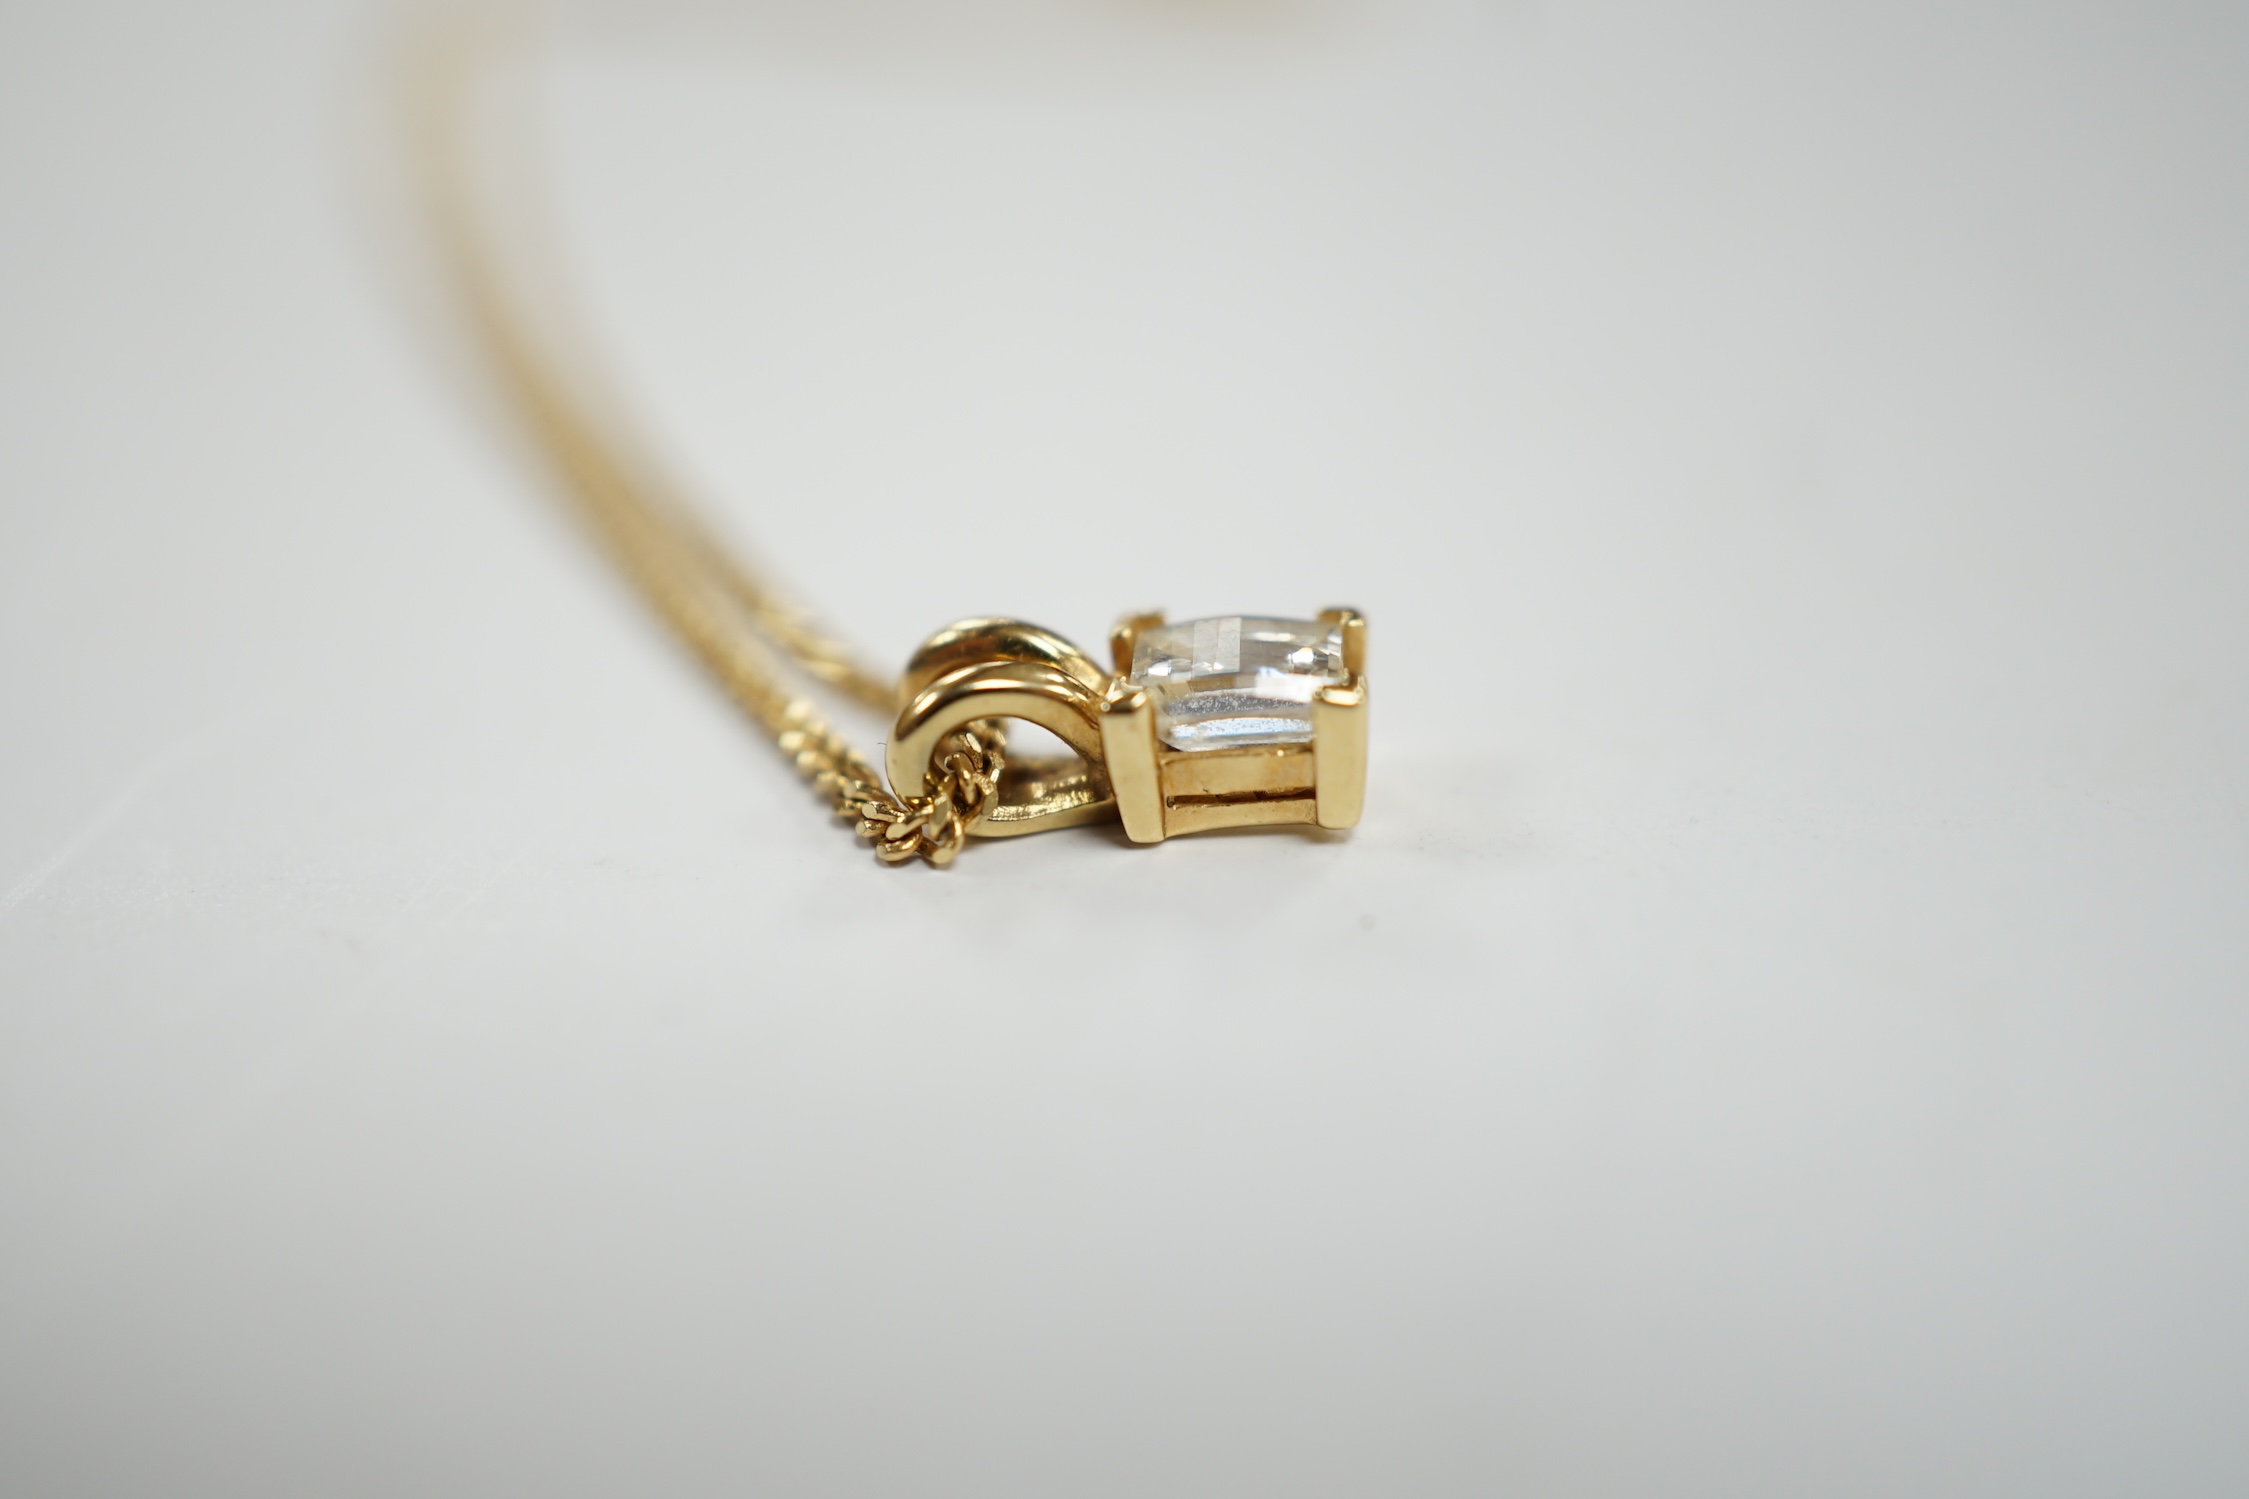 A modern 18ct gold and single stone fancy rectangular cut diamond set pendant, 9mm, on an 18ct gold fine link chain, 46cm, gross weight 3.6 grams.